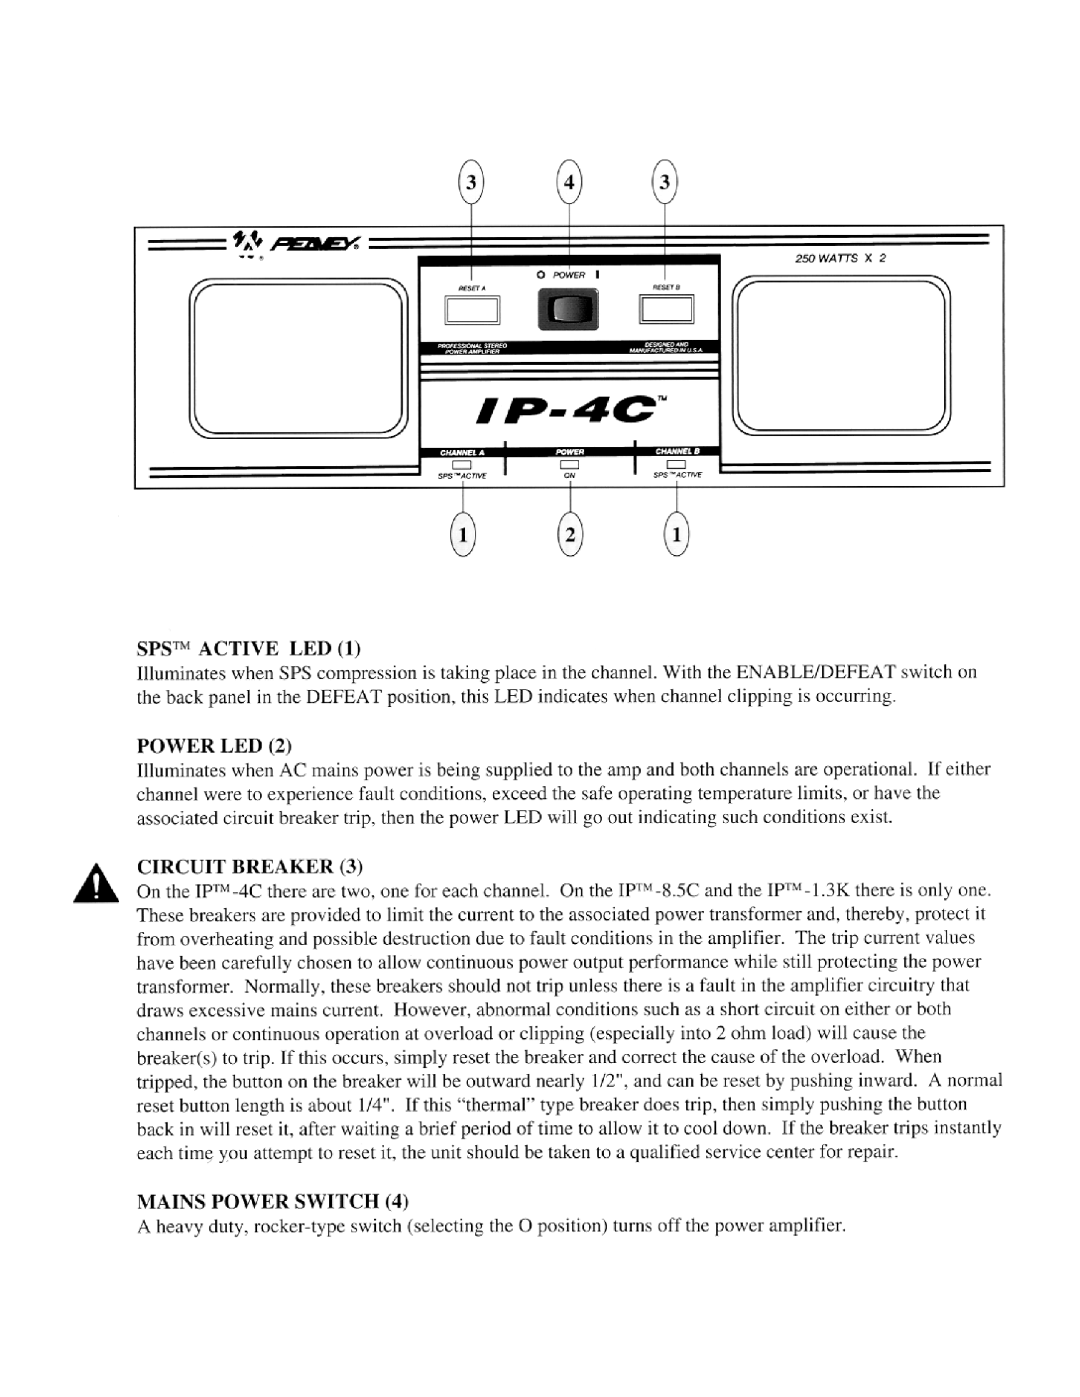 Peavey IP Series manual 